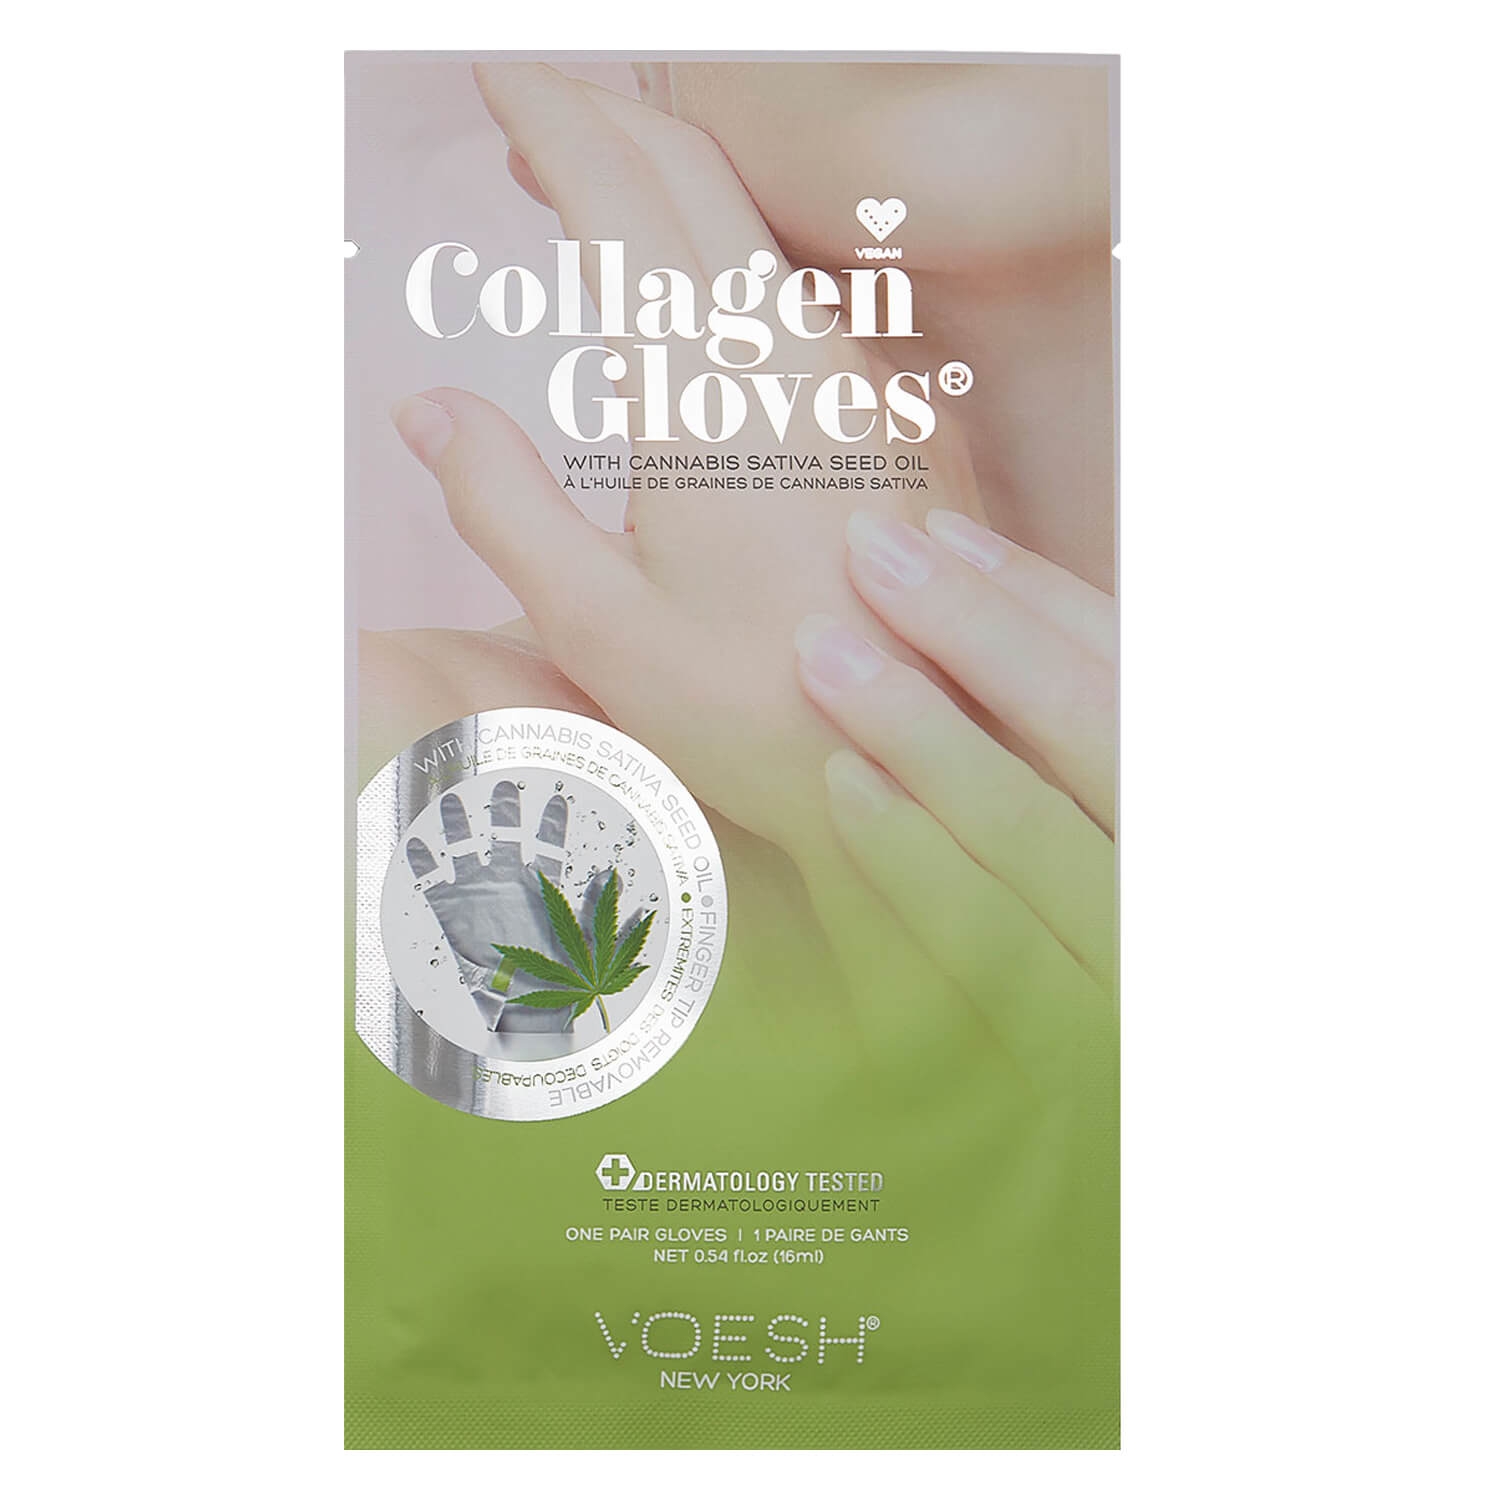 Image du produit de VOESH New York - Collagen Gloves Cannabis Seed Oil